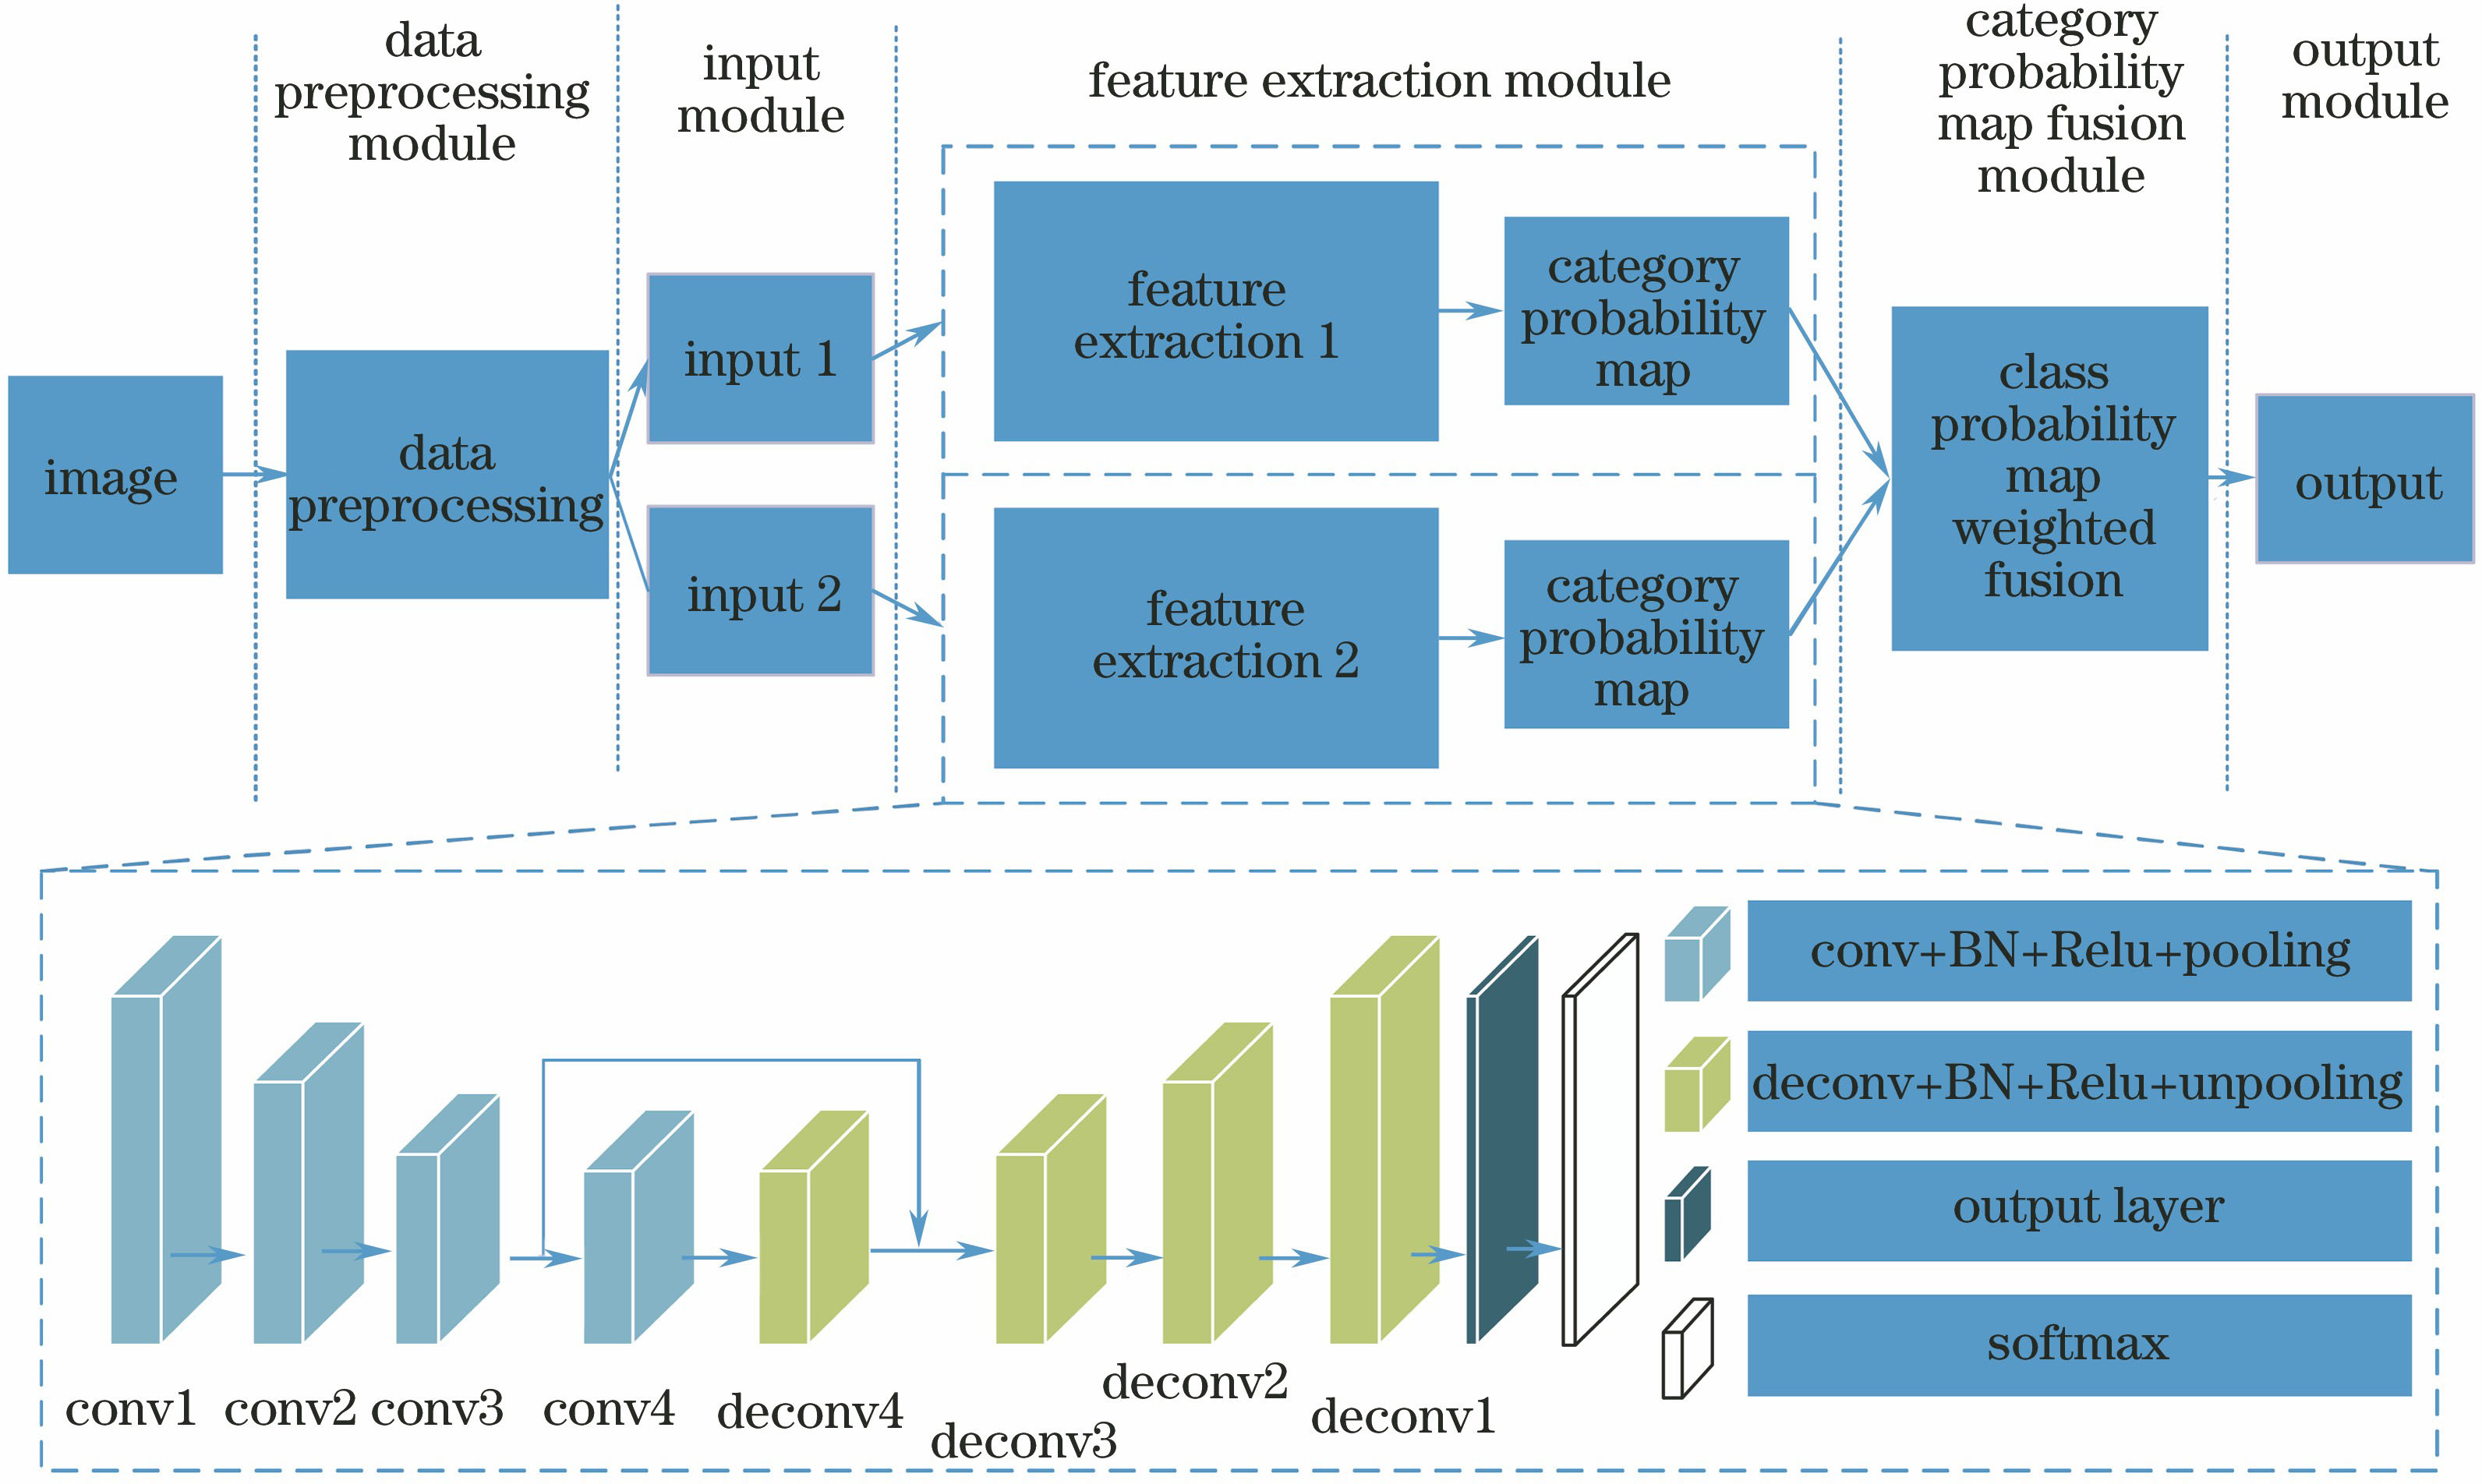 Convolution-deconvolution image segmentation model for fusion features and decision